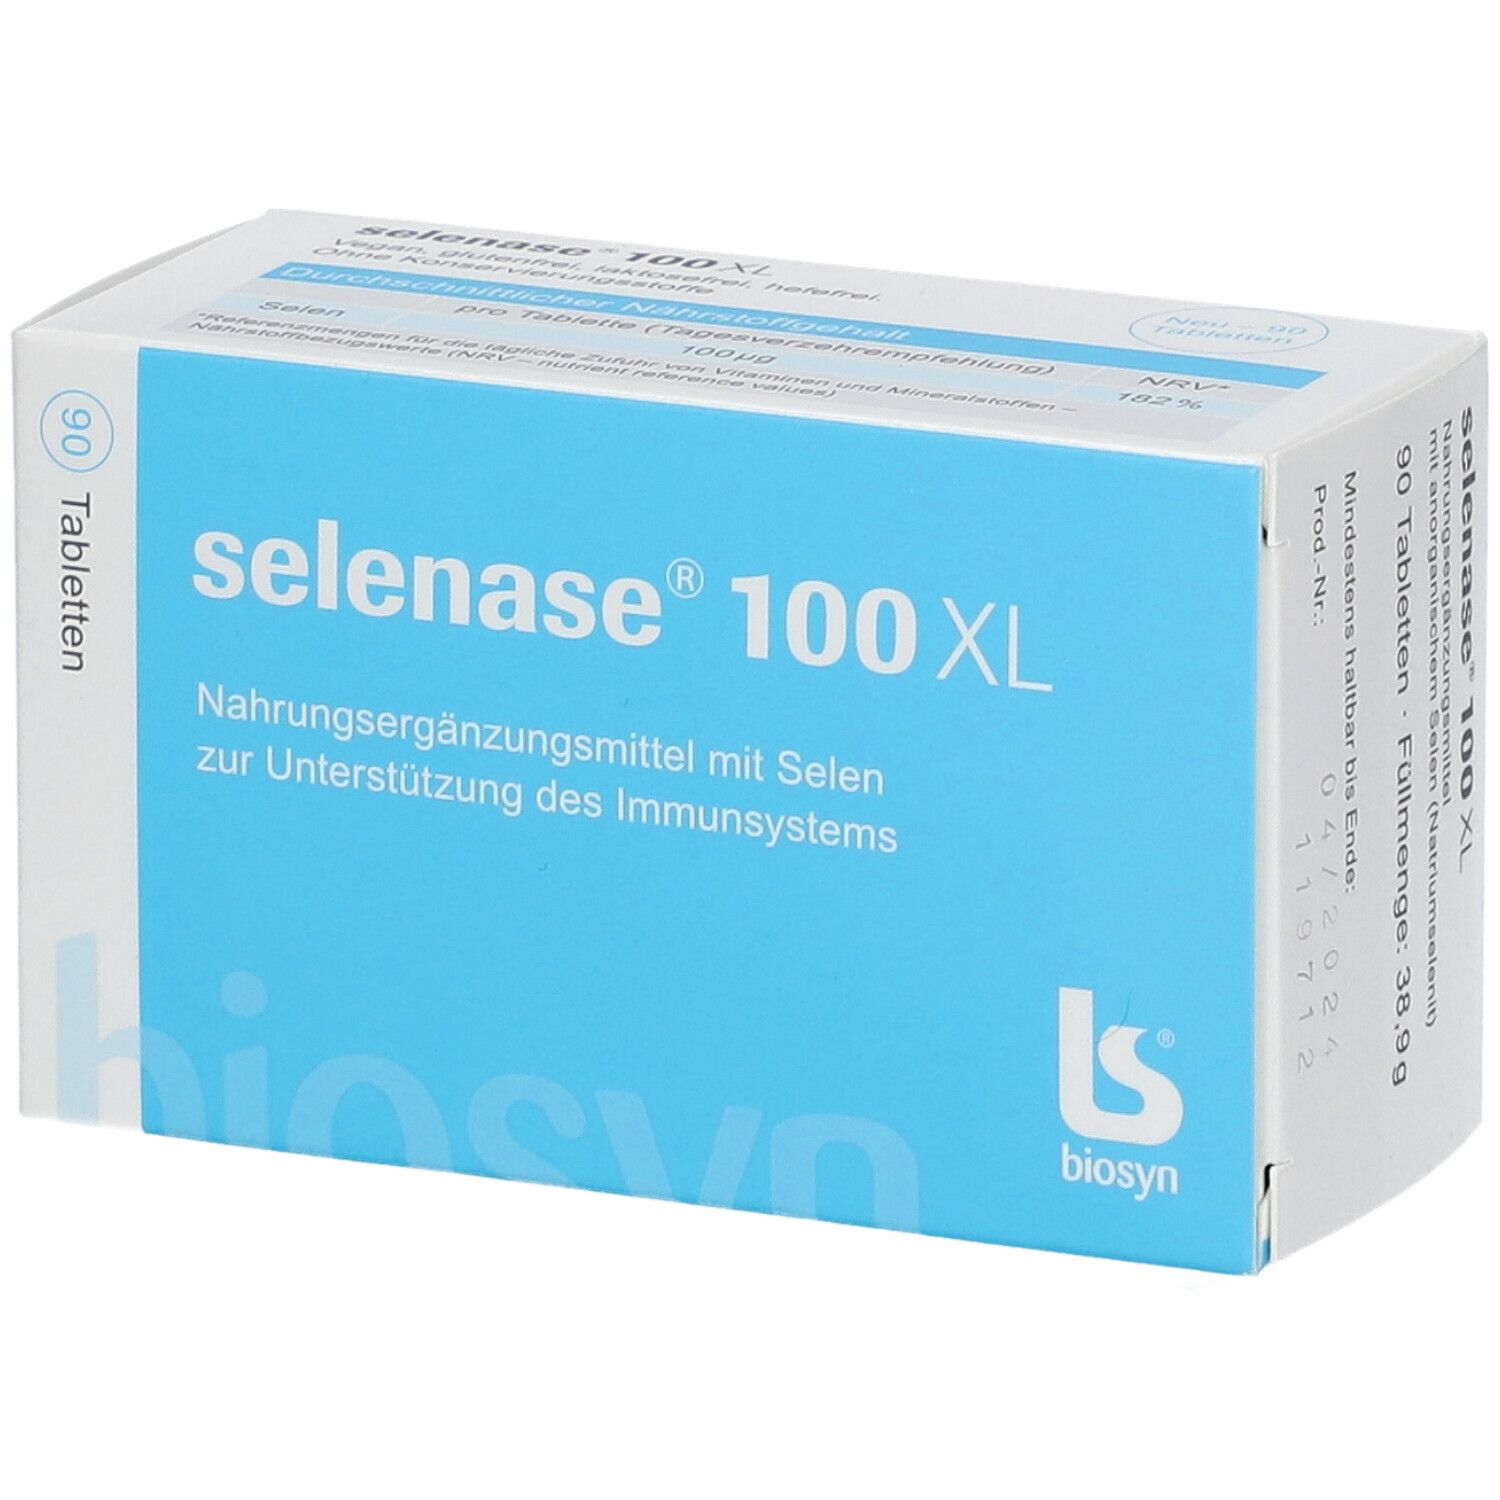 Image of selenase® 100 XL